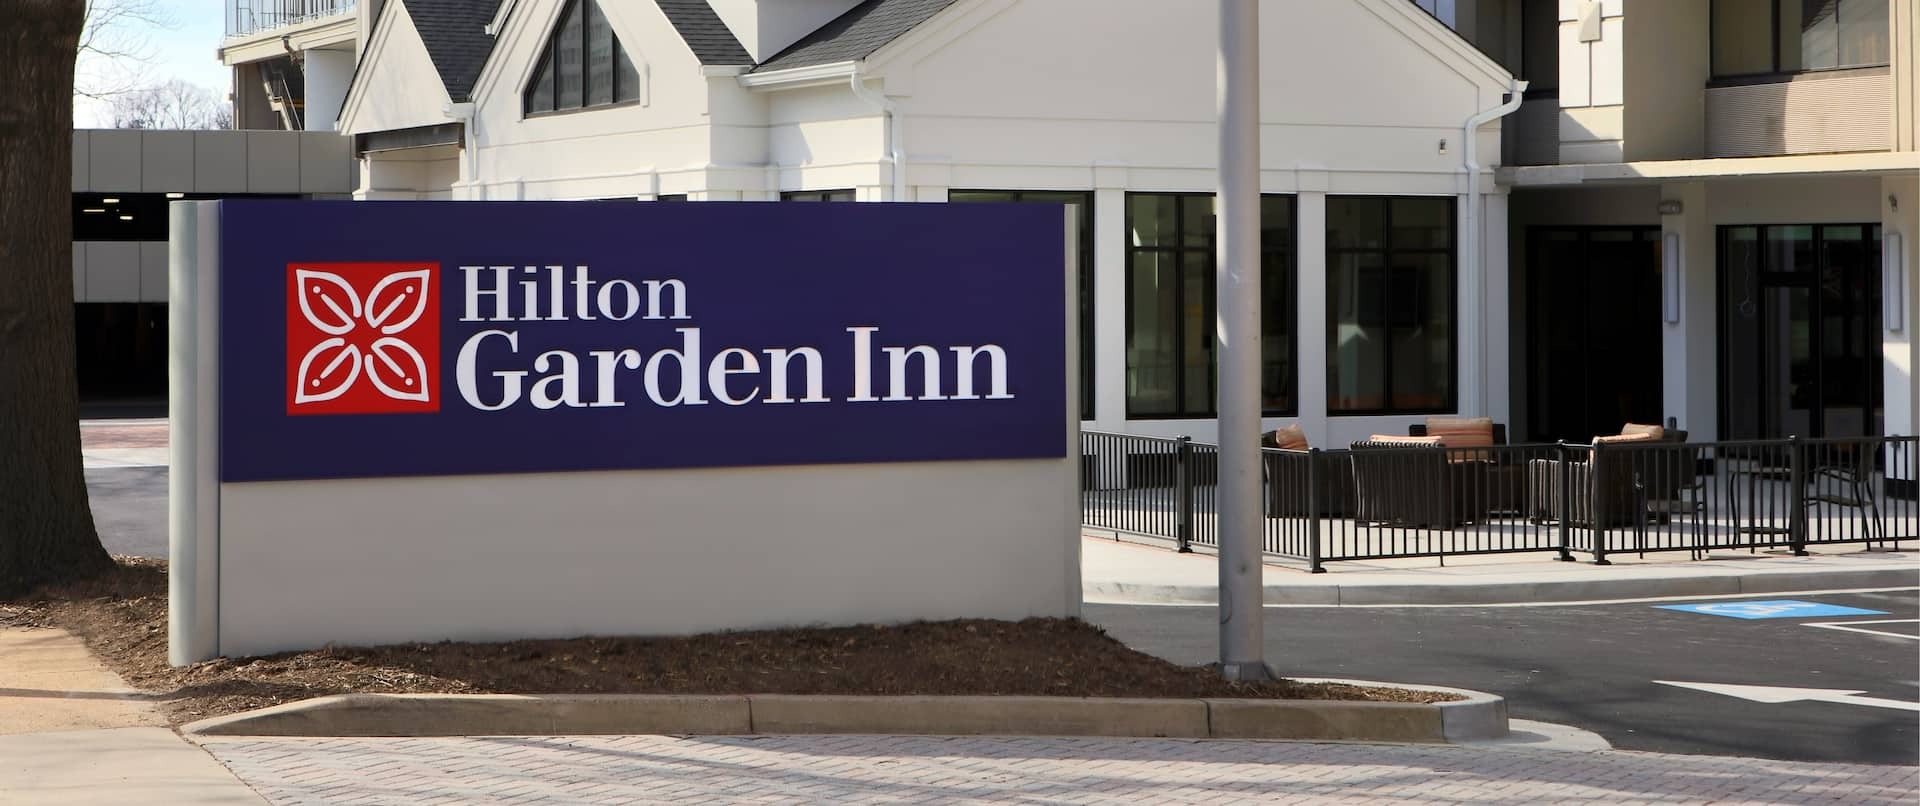 Photo of Hilton Garden Inn / Hampton Inn and Suites Reagan National Airport, Arlington, VA